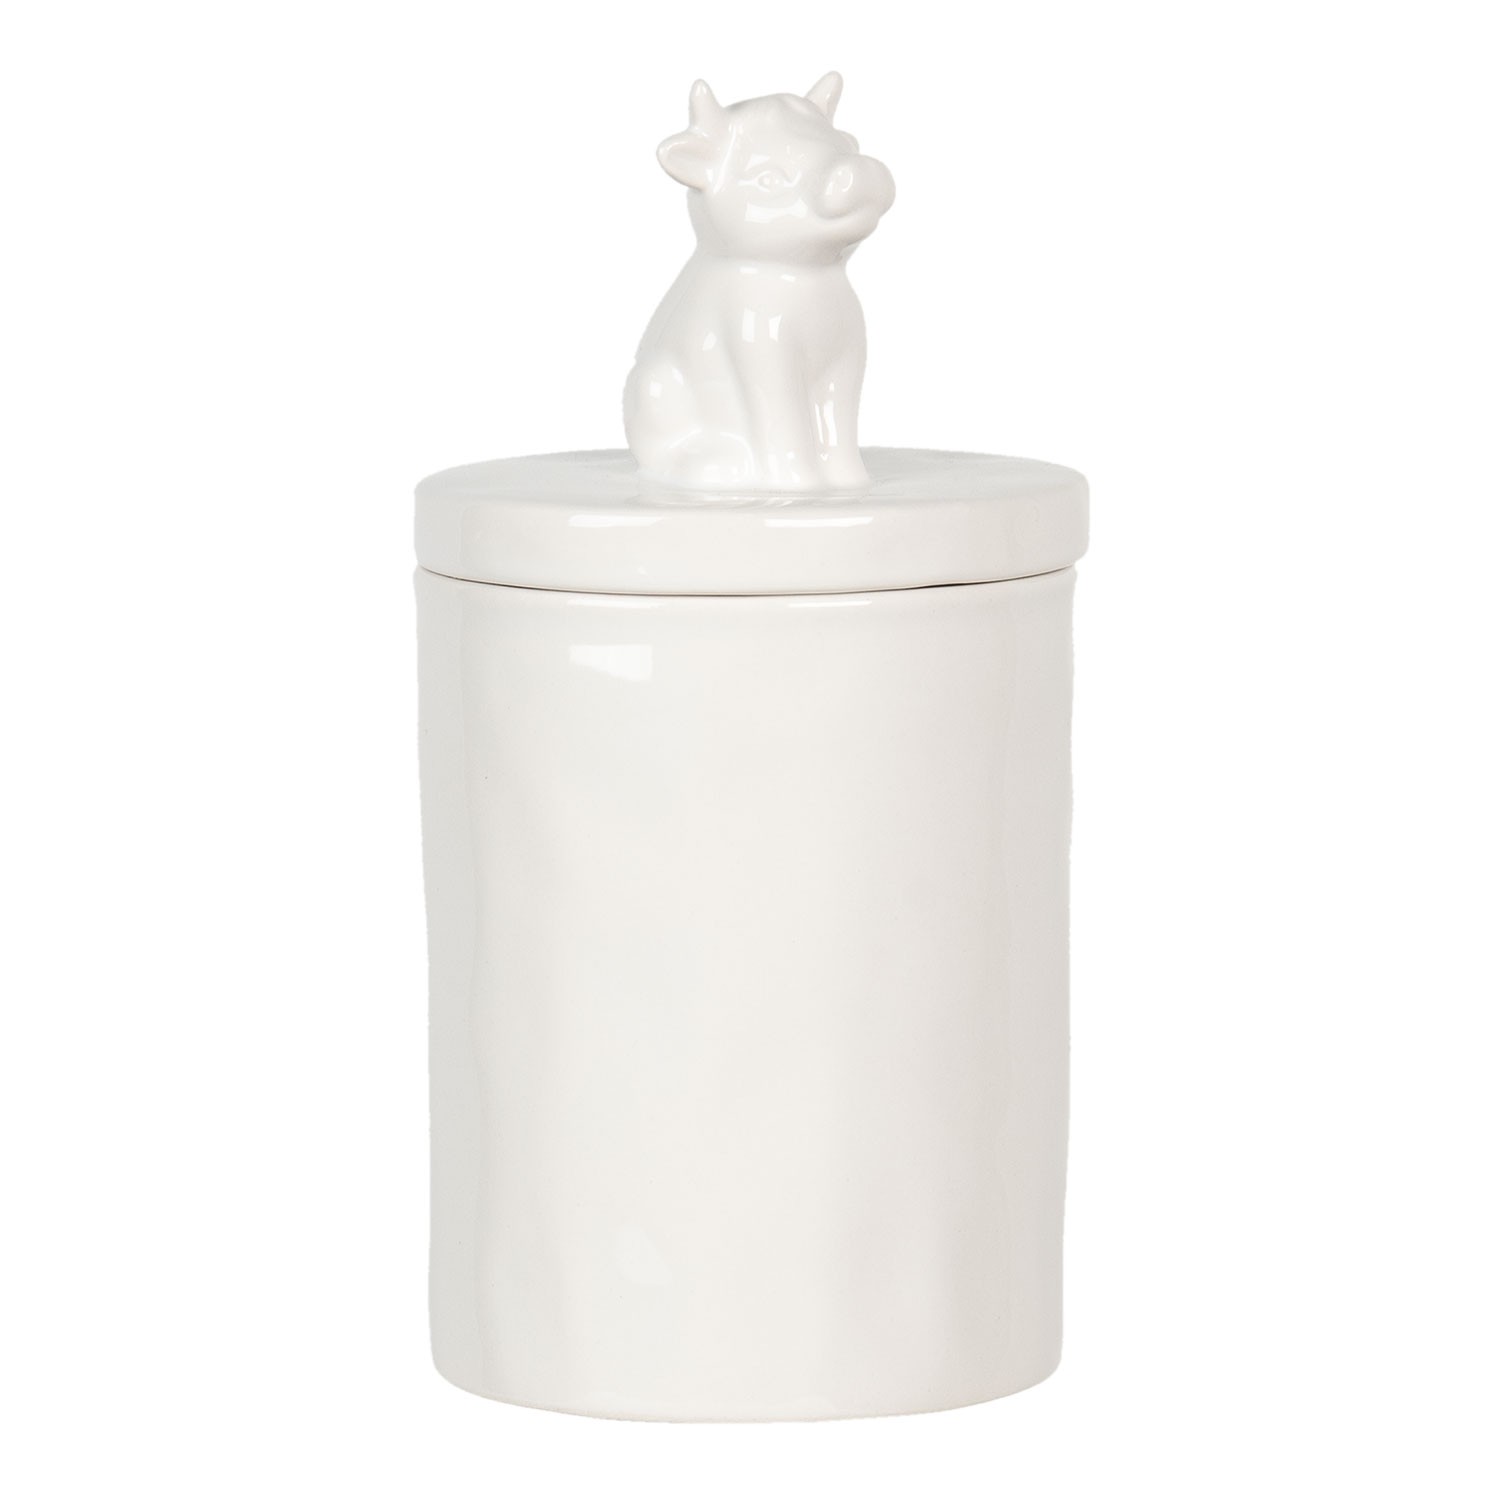 Bílá keramická dóza s krávou na víčku Campagne – Ø 11*19 cm Clayre & Eef